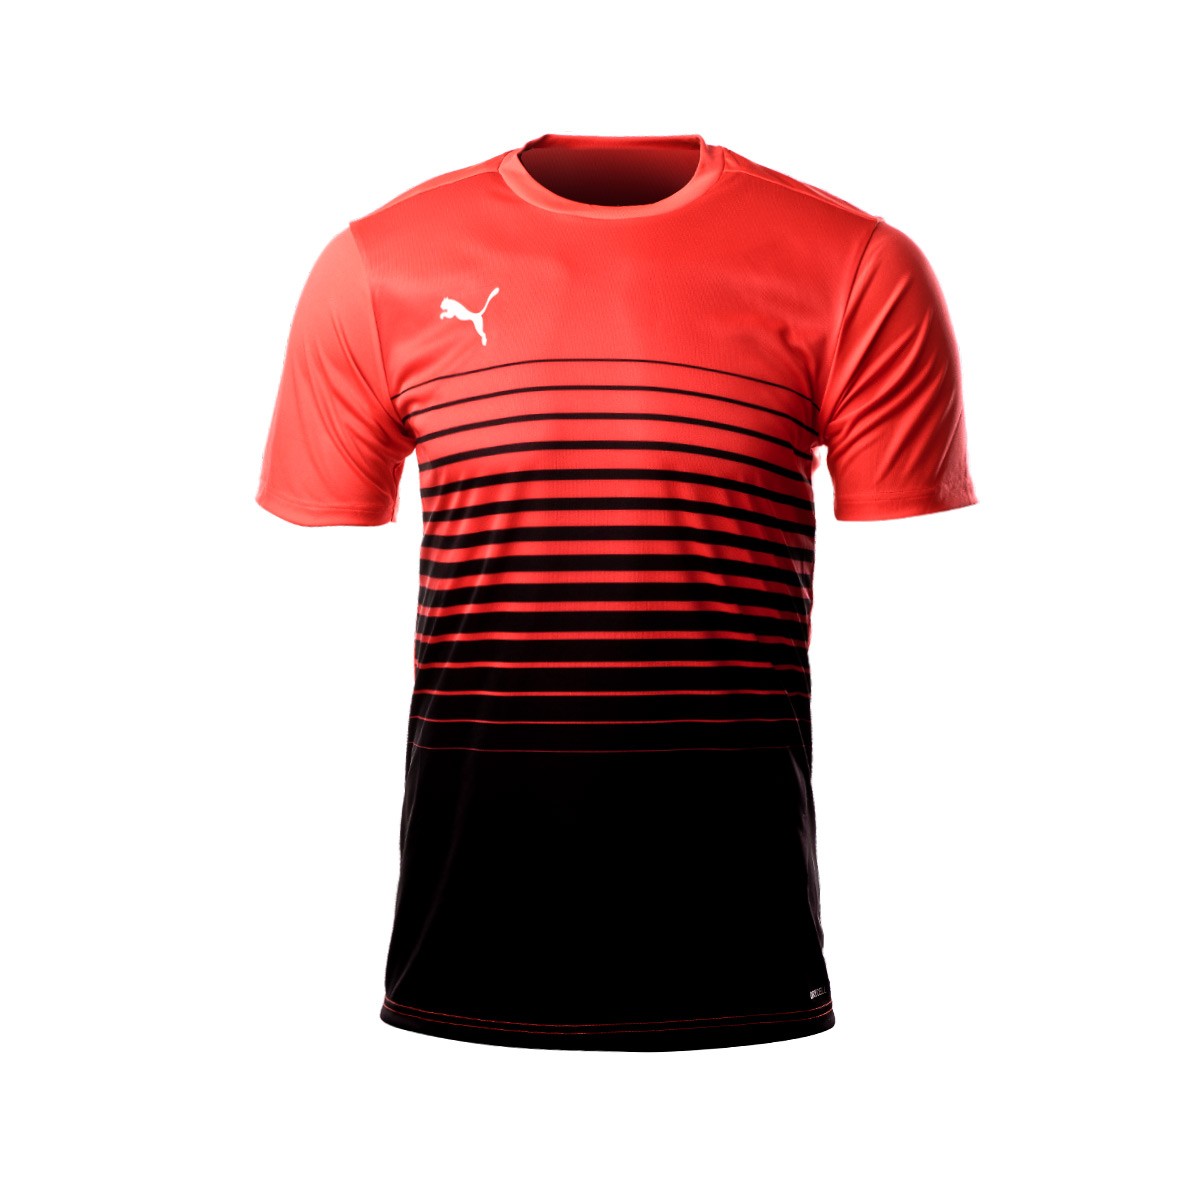 Jersey Puma Ftblplay Graphic Red Blast Black Football Store